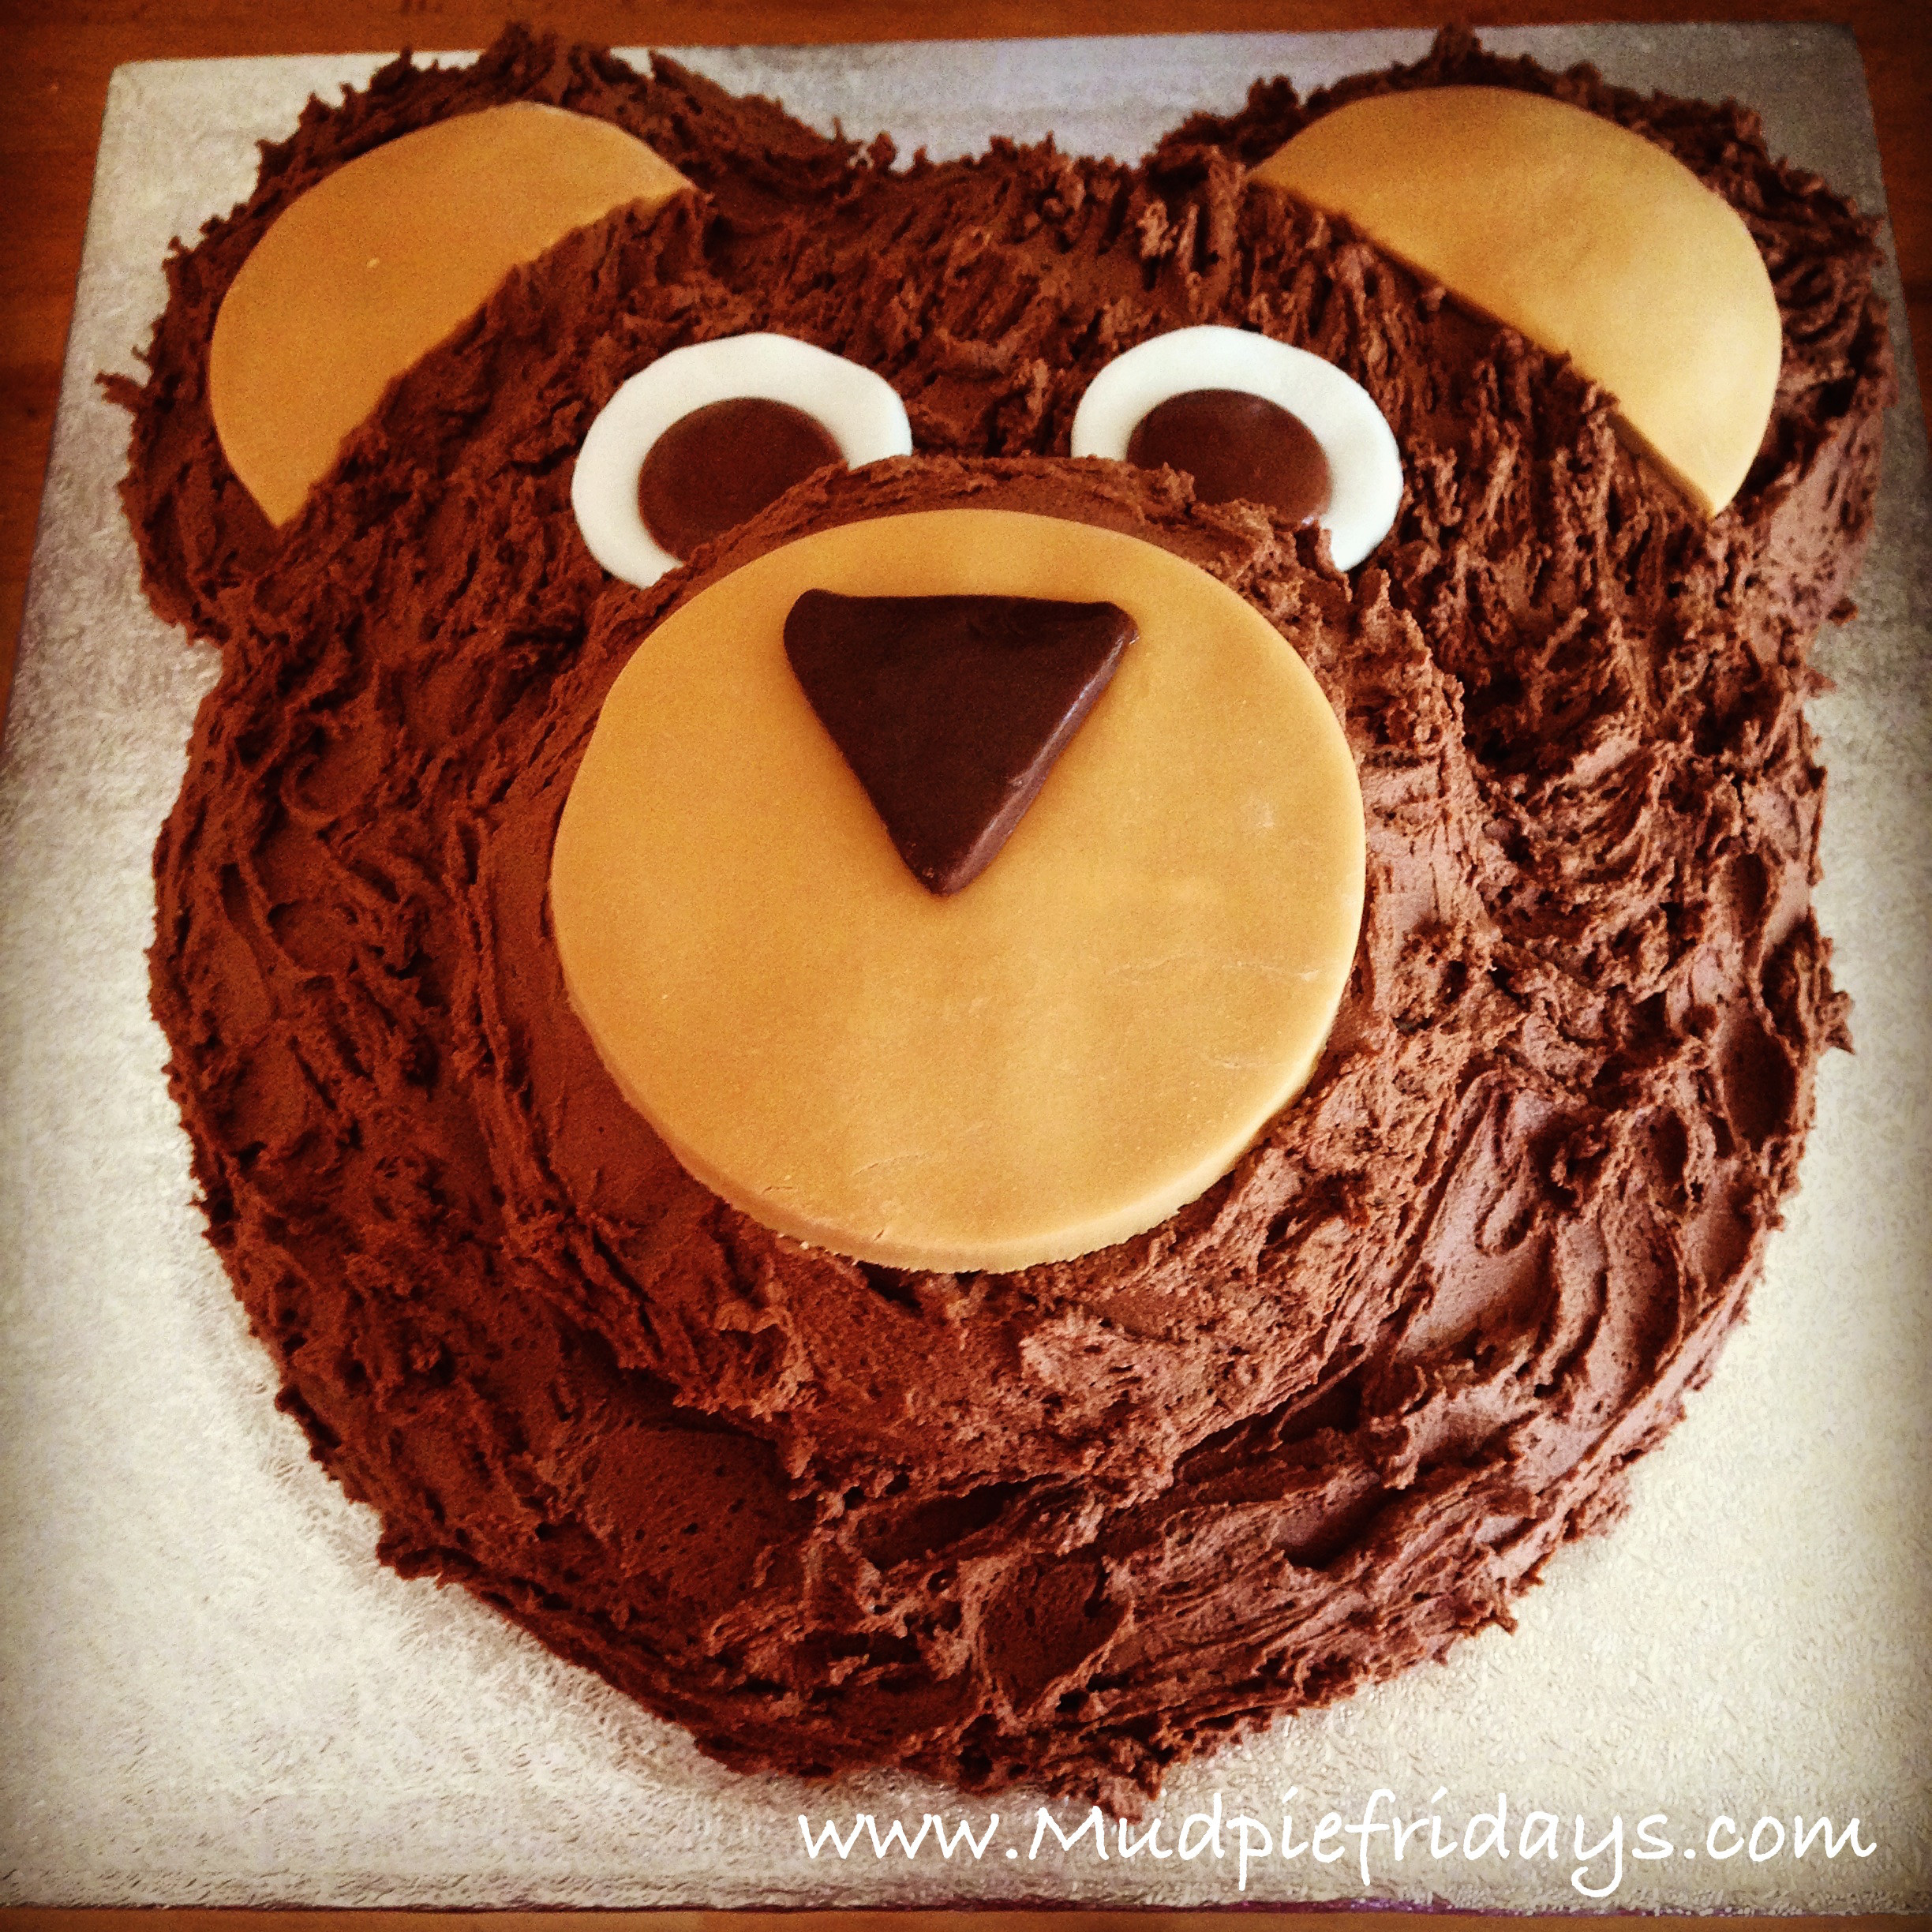 Bear Birthday Cake
 Going on a Bear Hunt Birthday Party mudpiefridays